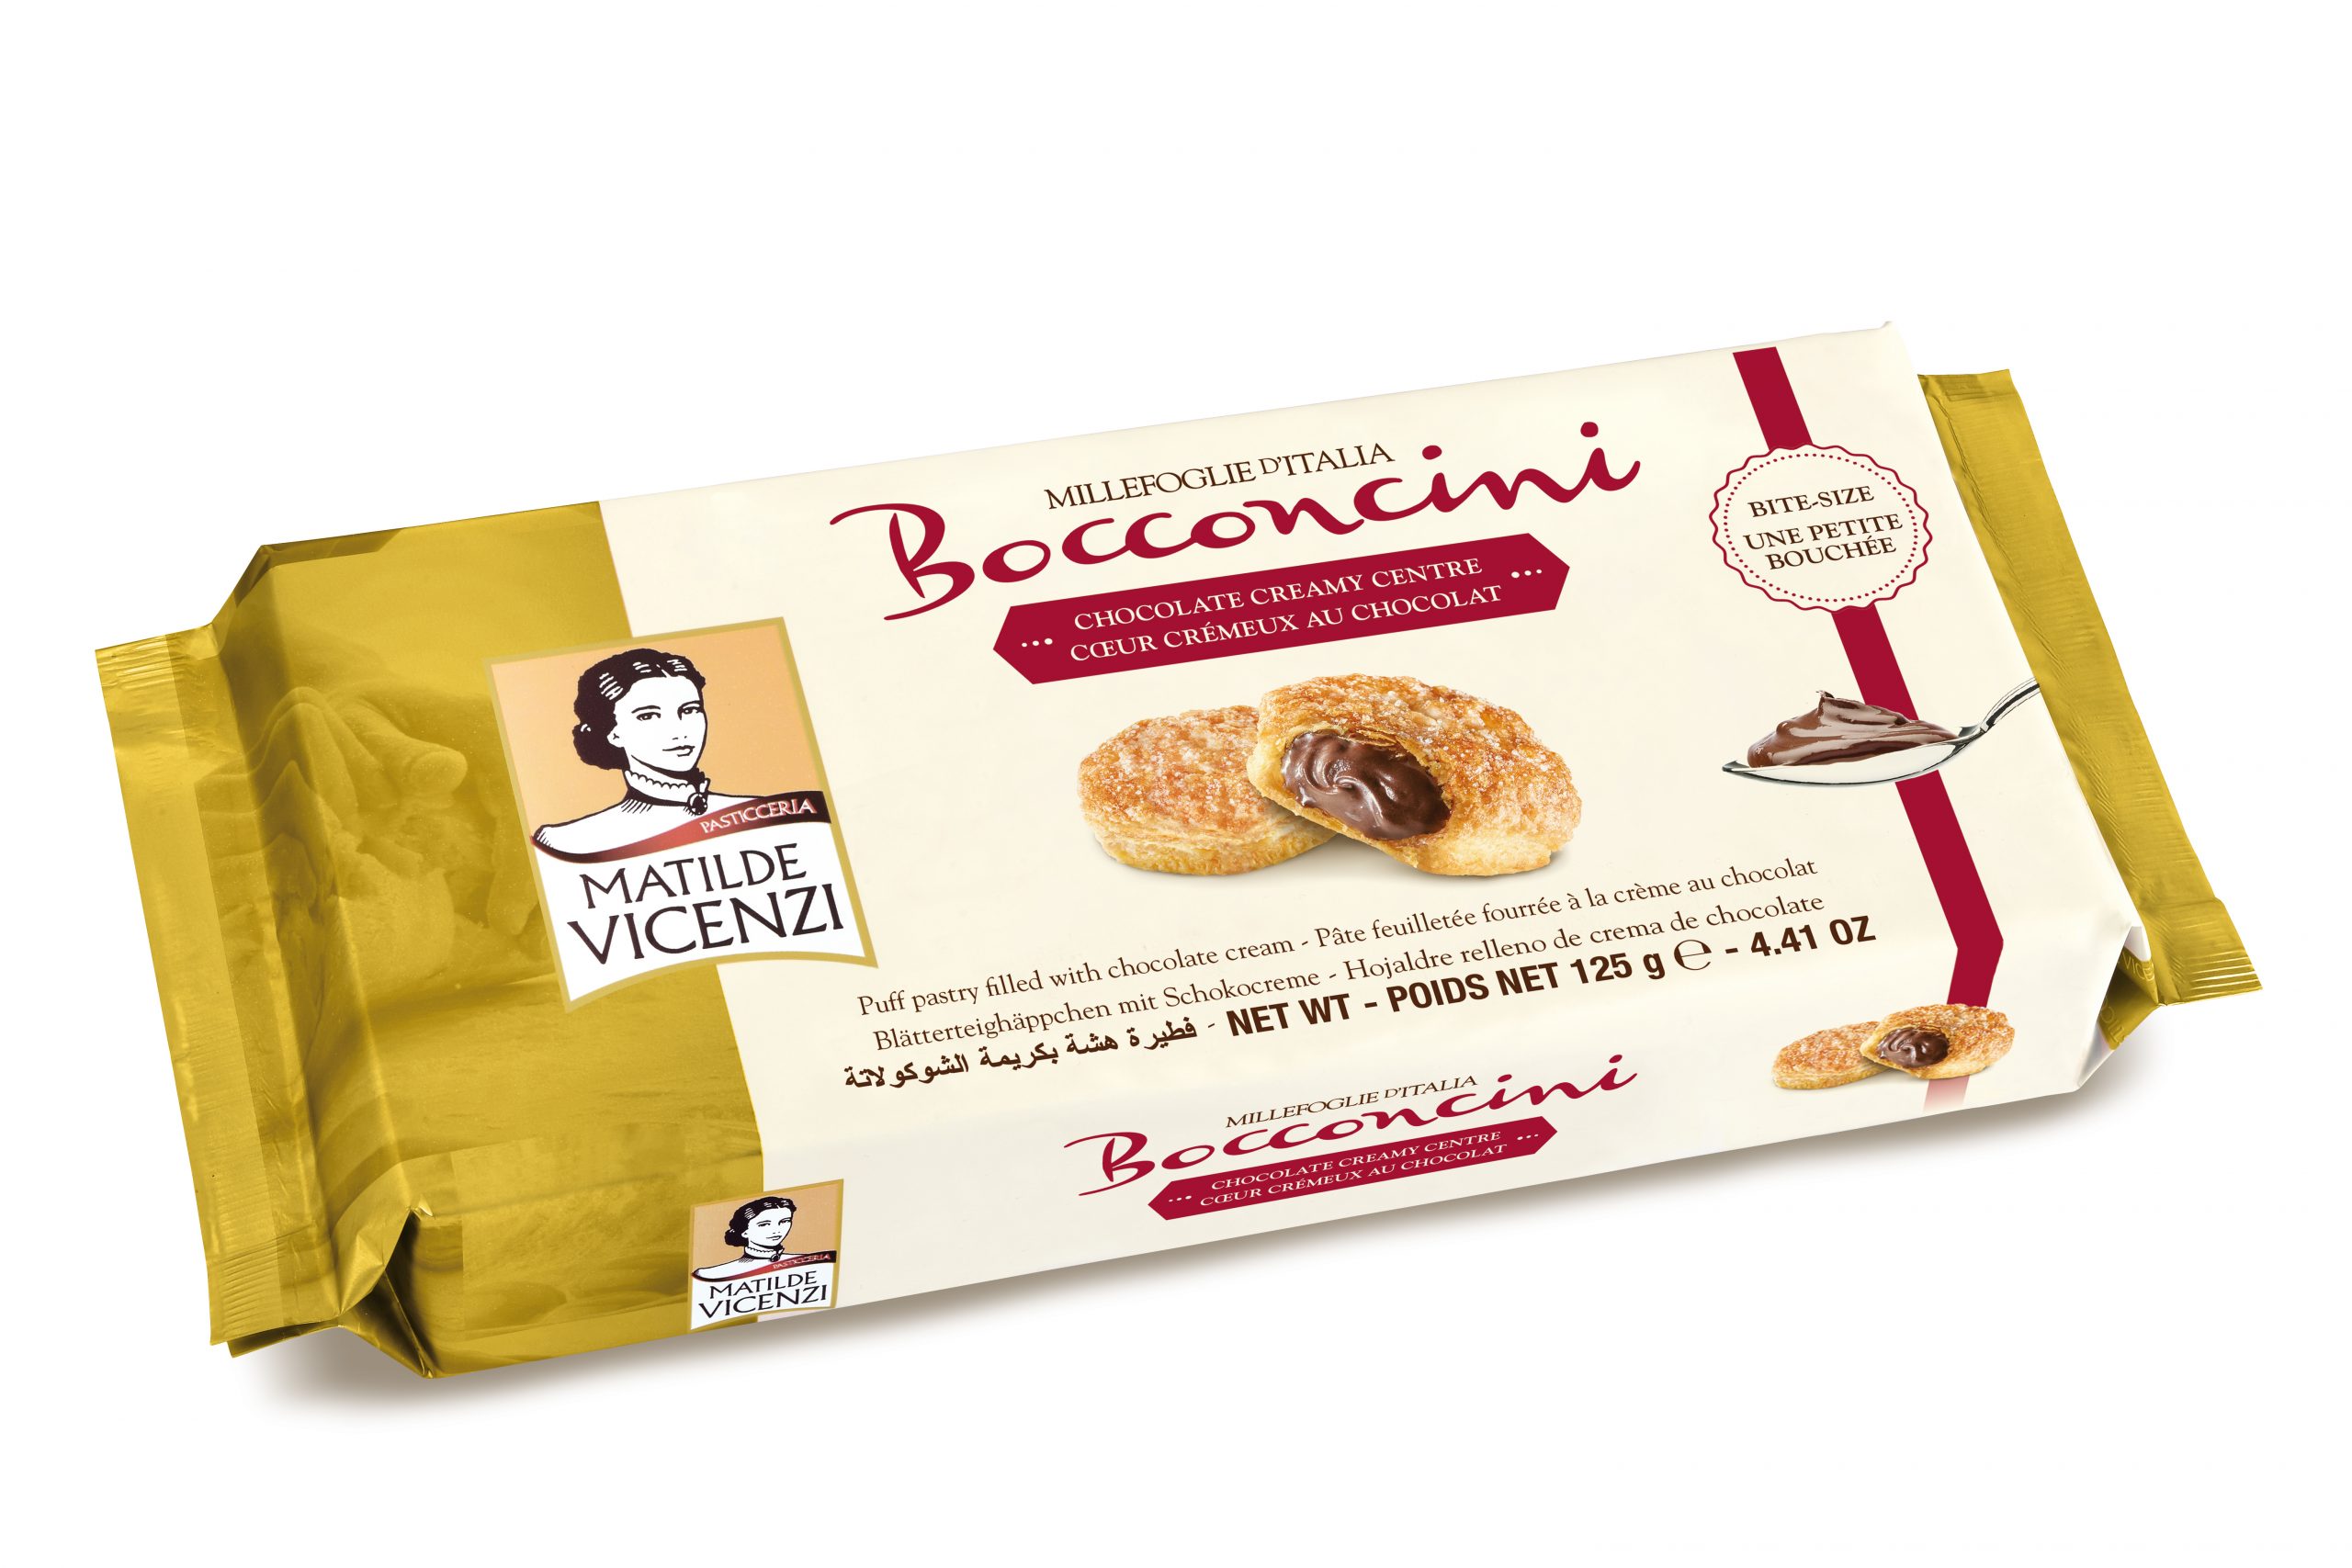 Vicenzi Bocconcini Cioccolato töltött levelessütemény 125g